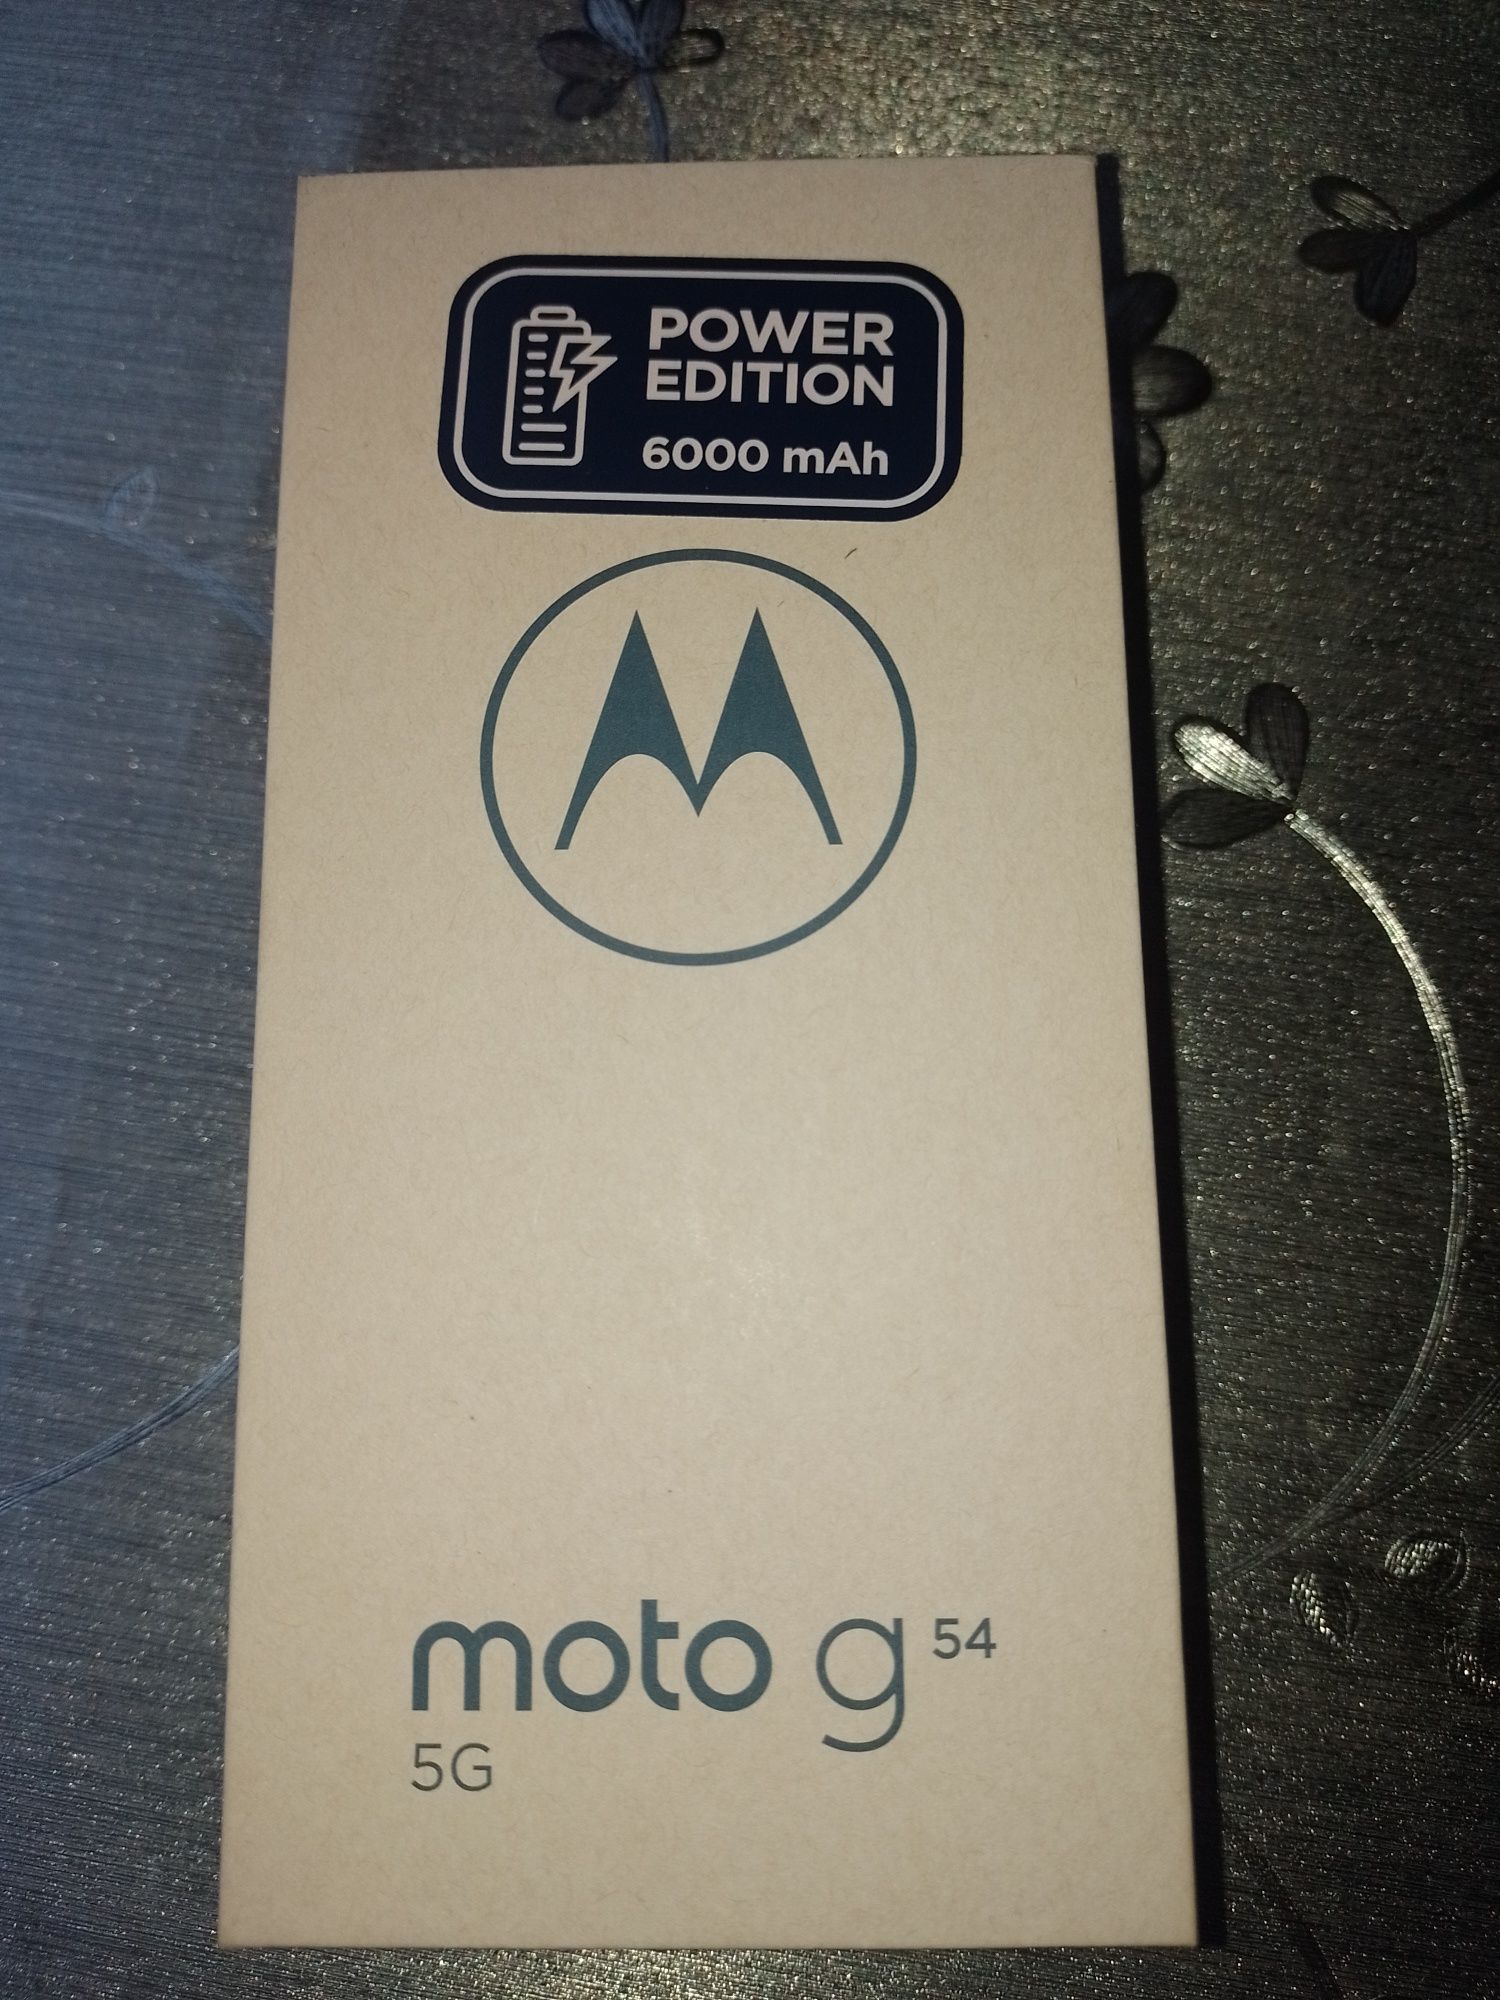 Motorola g54 5g power edition